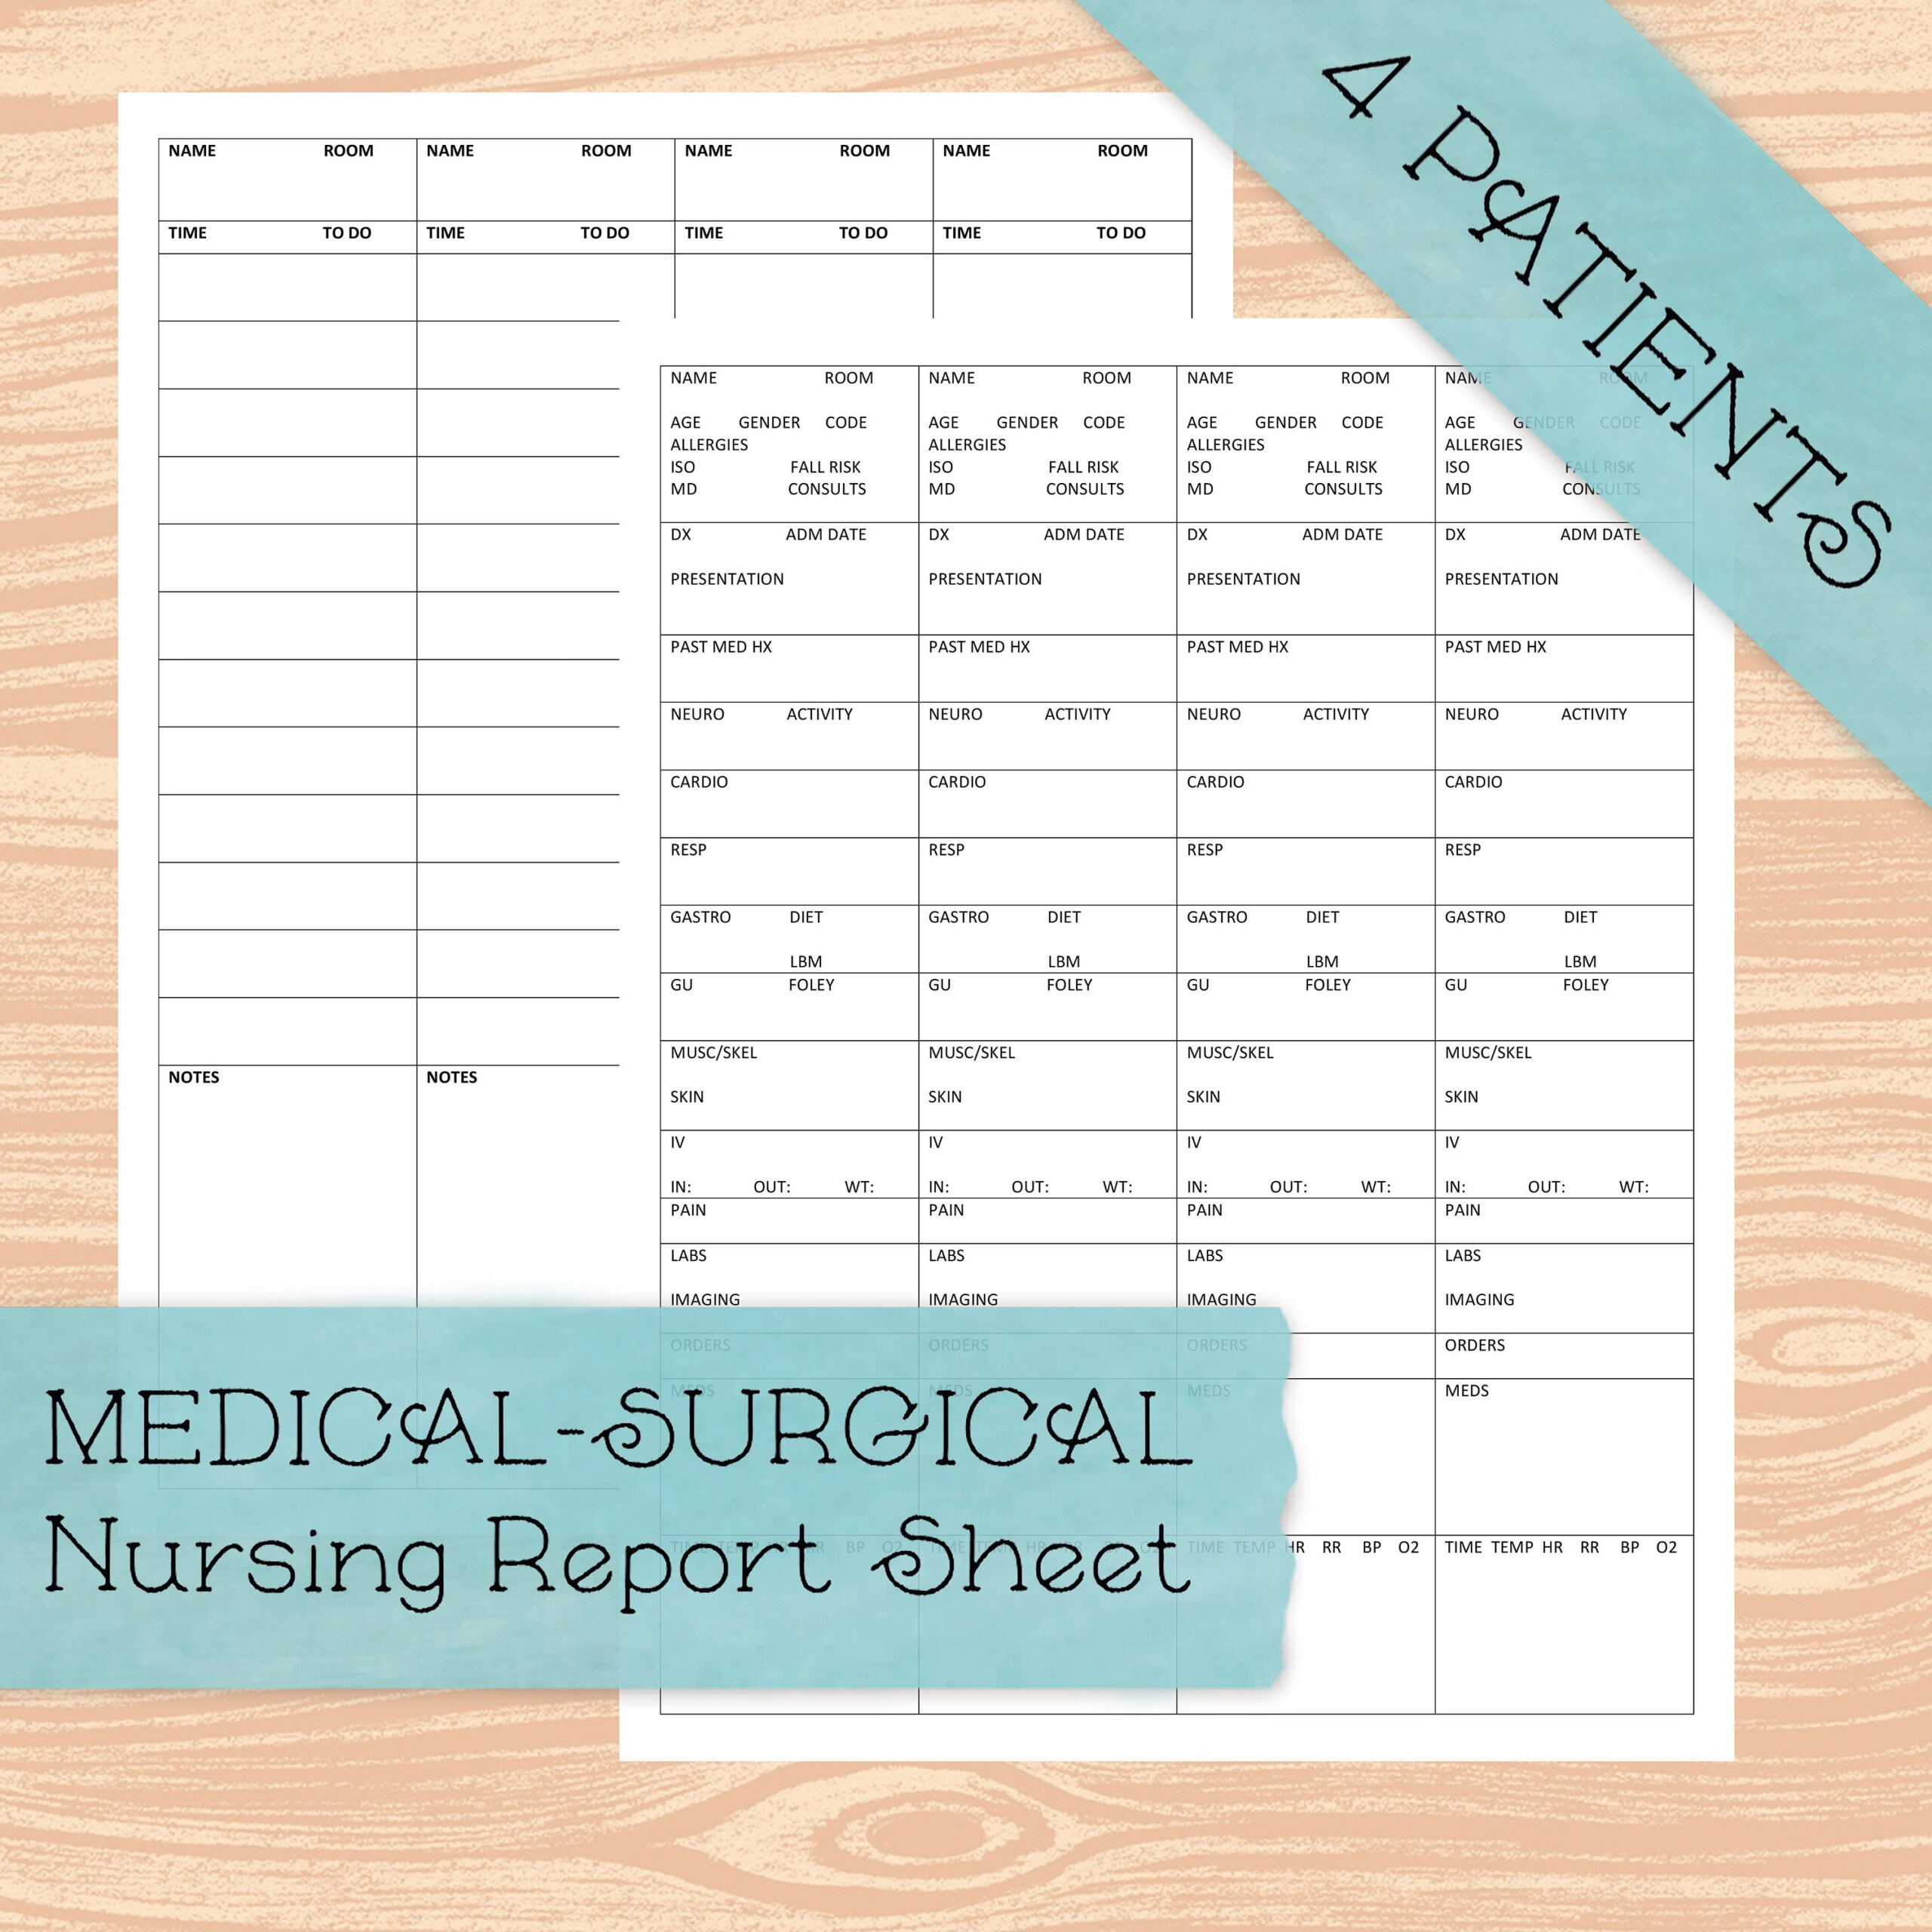 10 Patient Nursing Report Sheet Template (Medical Surgical) Throughout Med Surg Report Sheet Templates